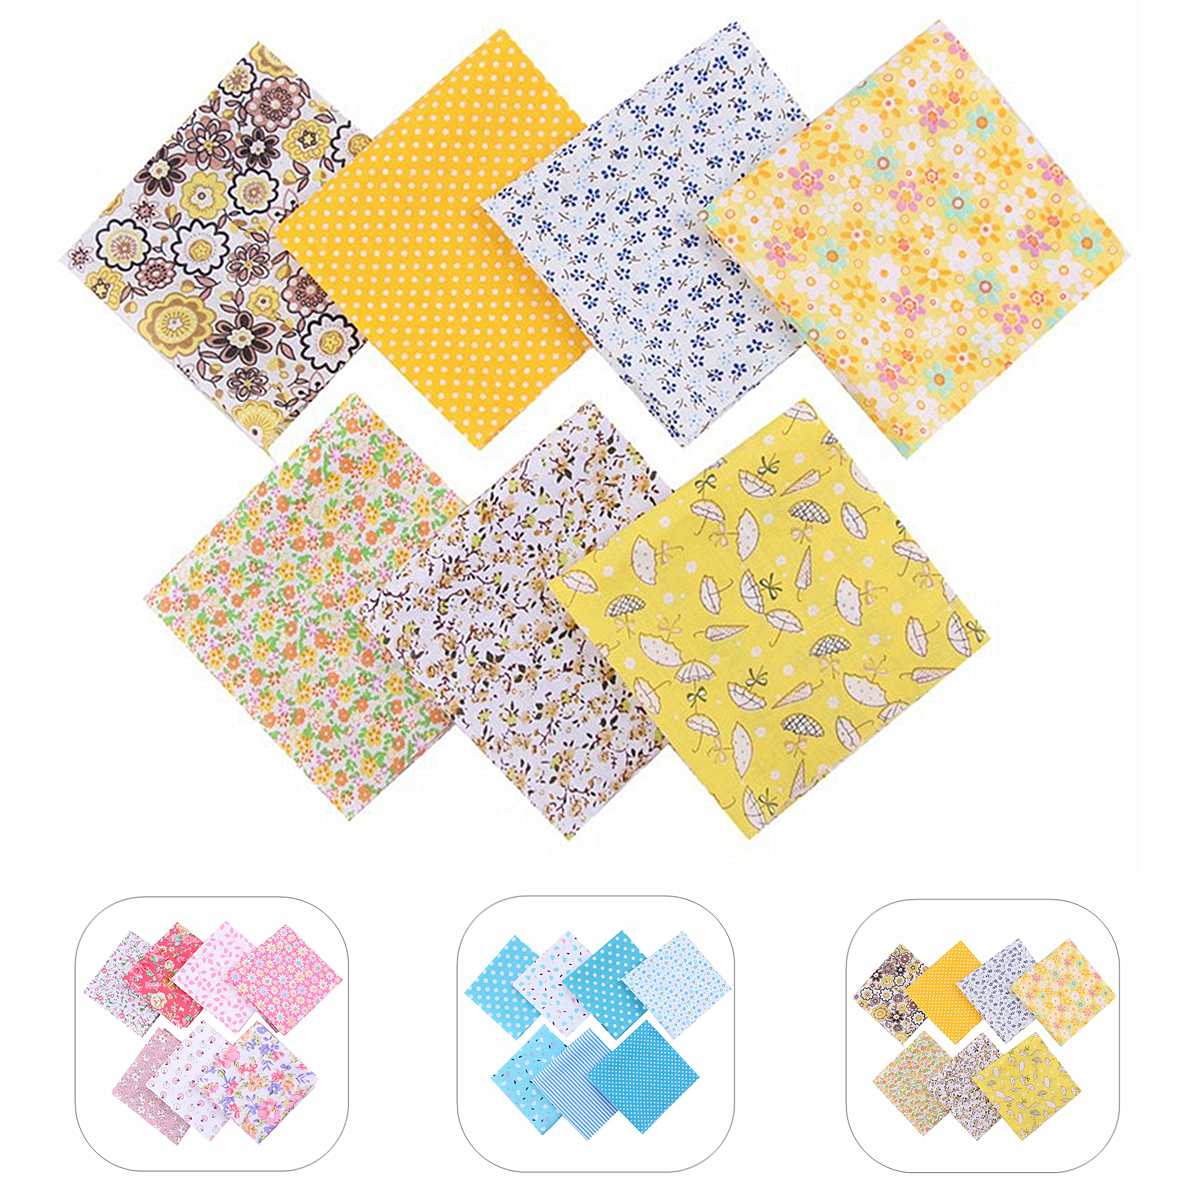 DIY-7PCS-Quilting-Bundle-Patchwork-Cotton-Fabric-Handmade-Sewing-Crafts-Floral-1691620-1